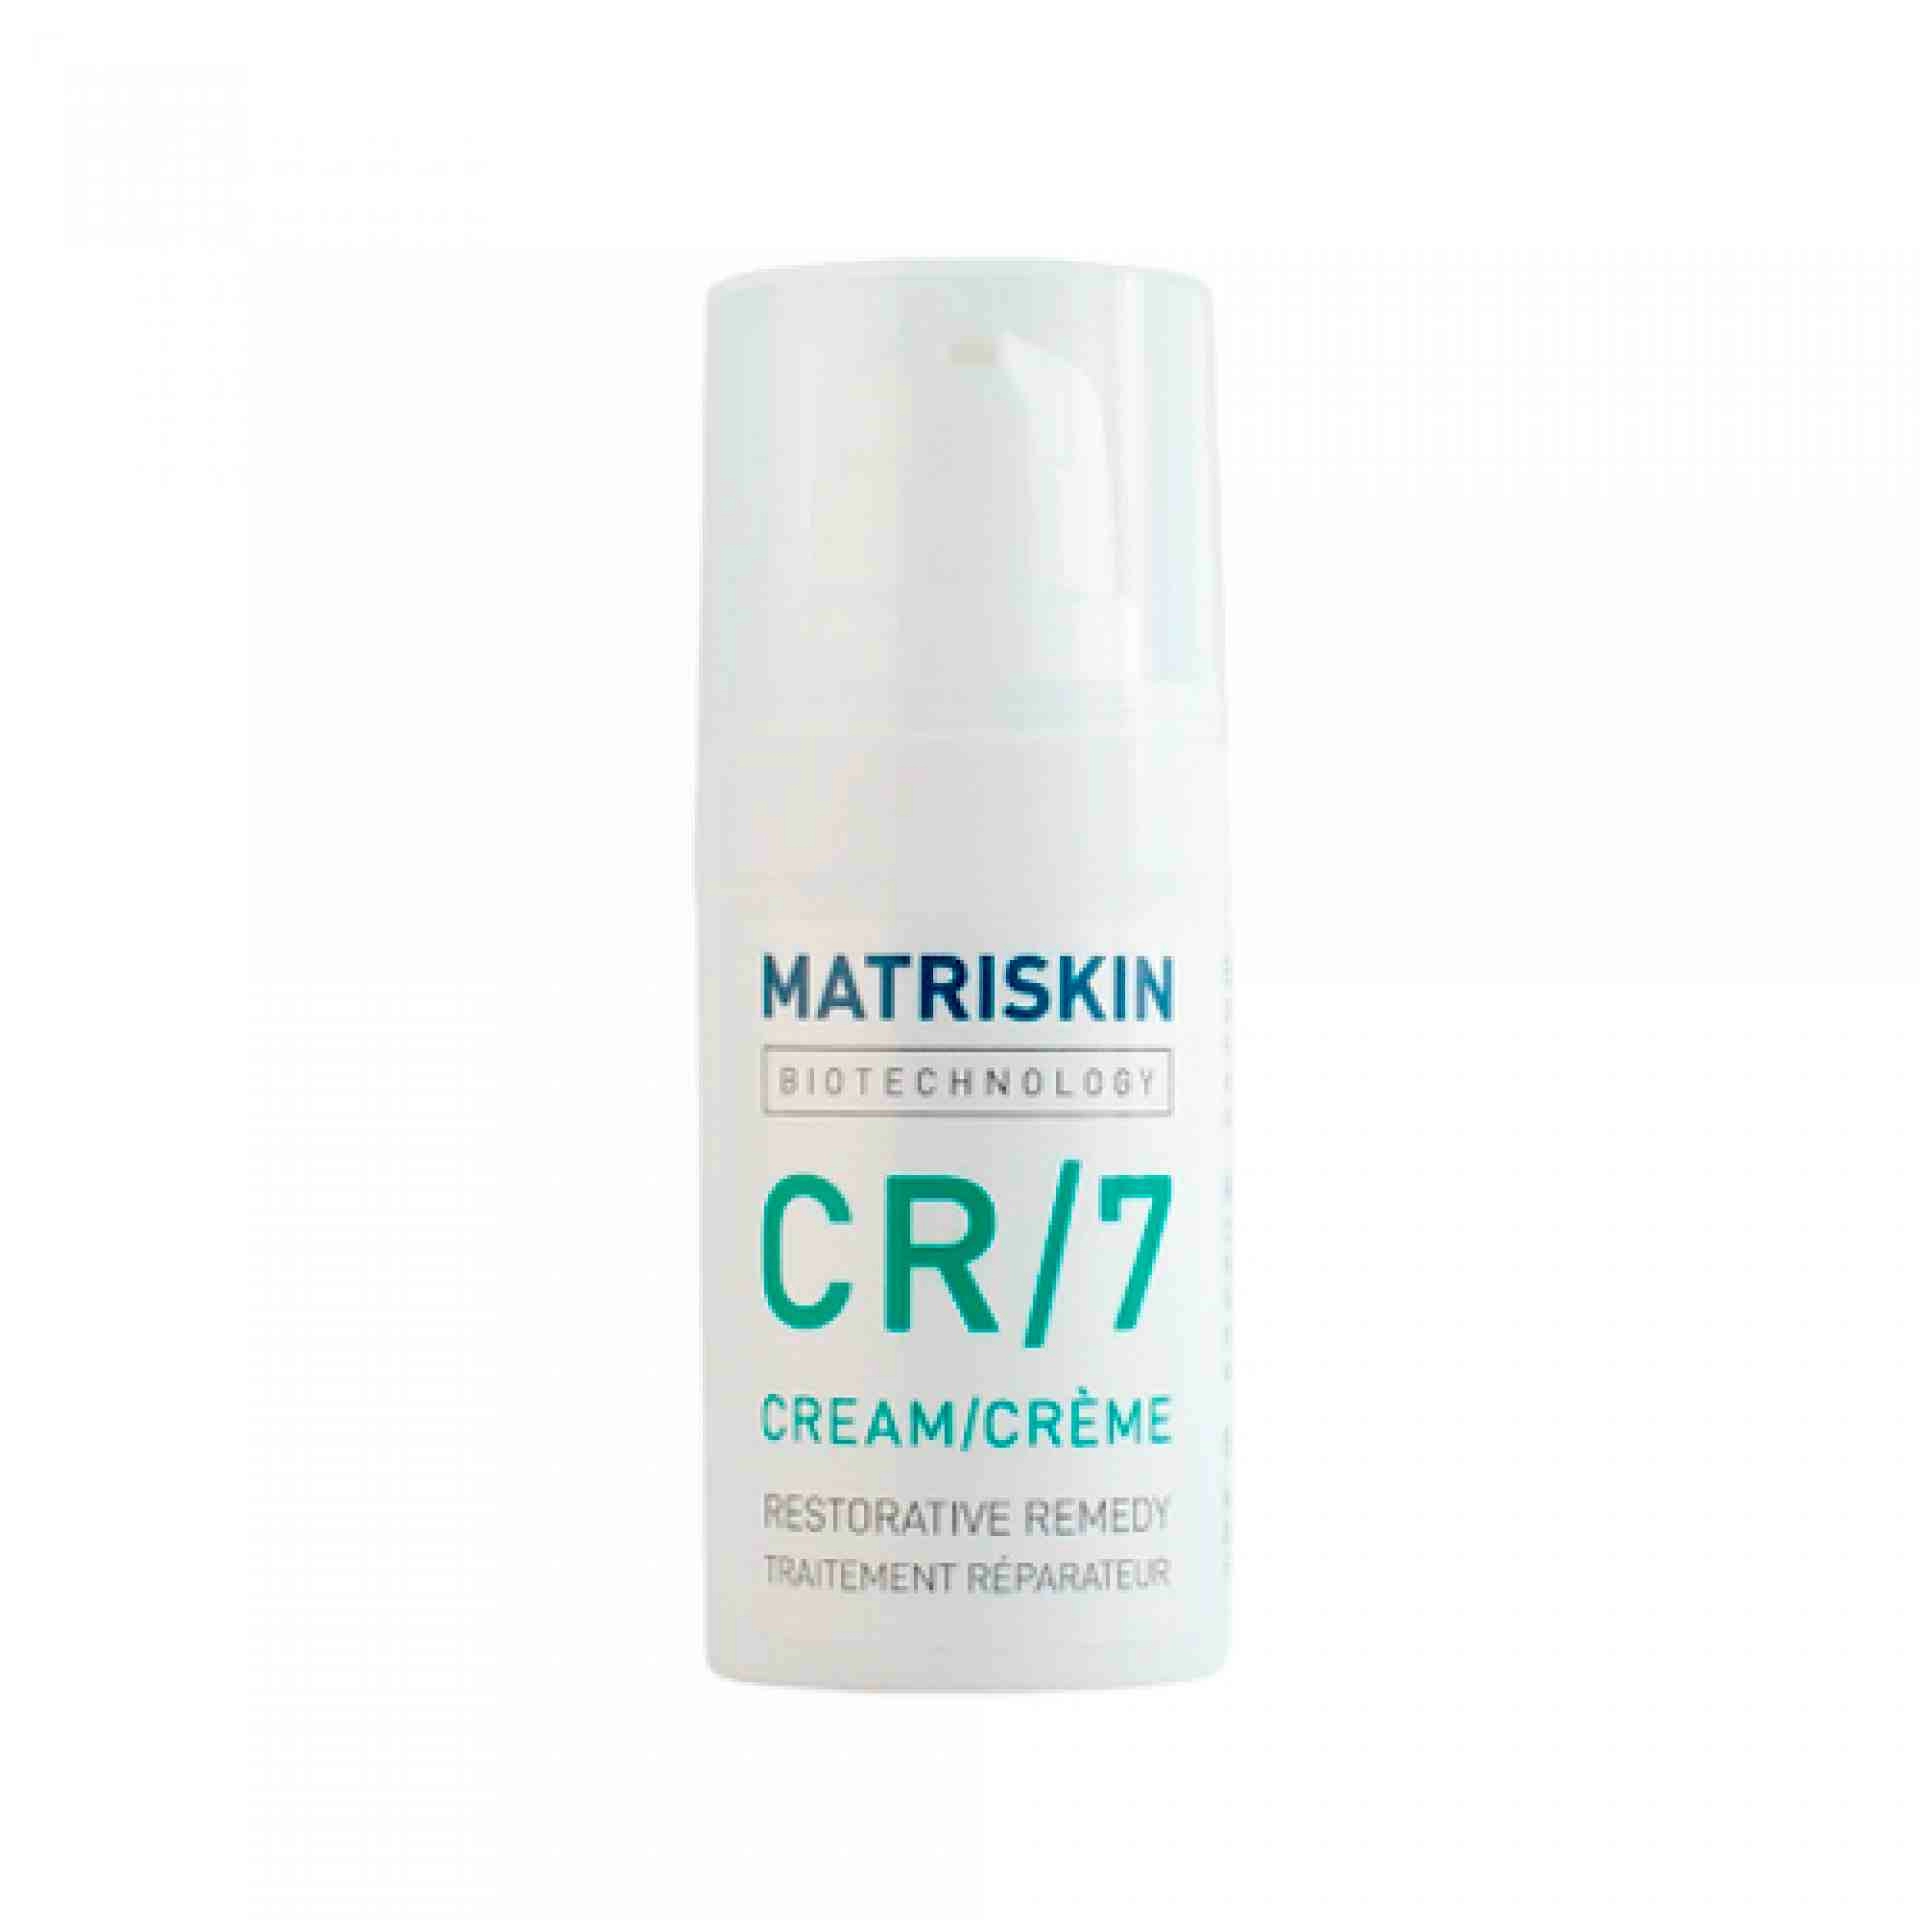 Crema CR/7 Matriskin ®